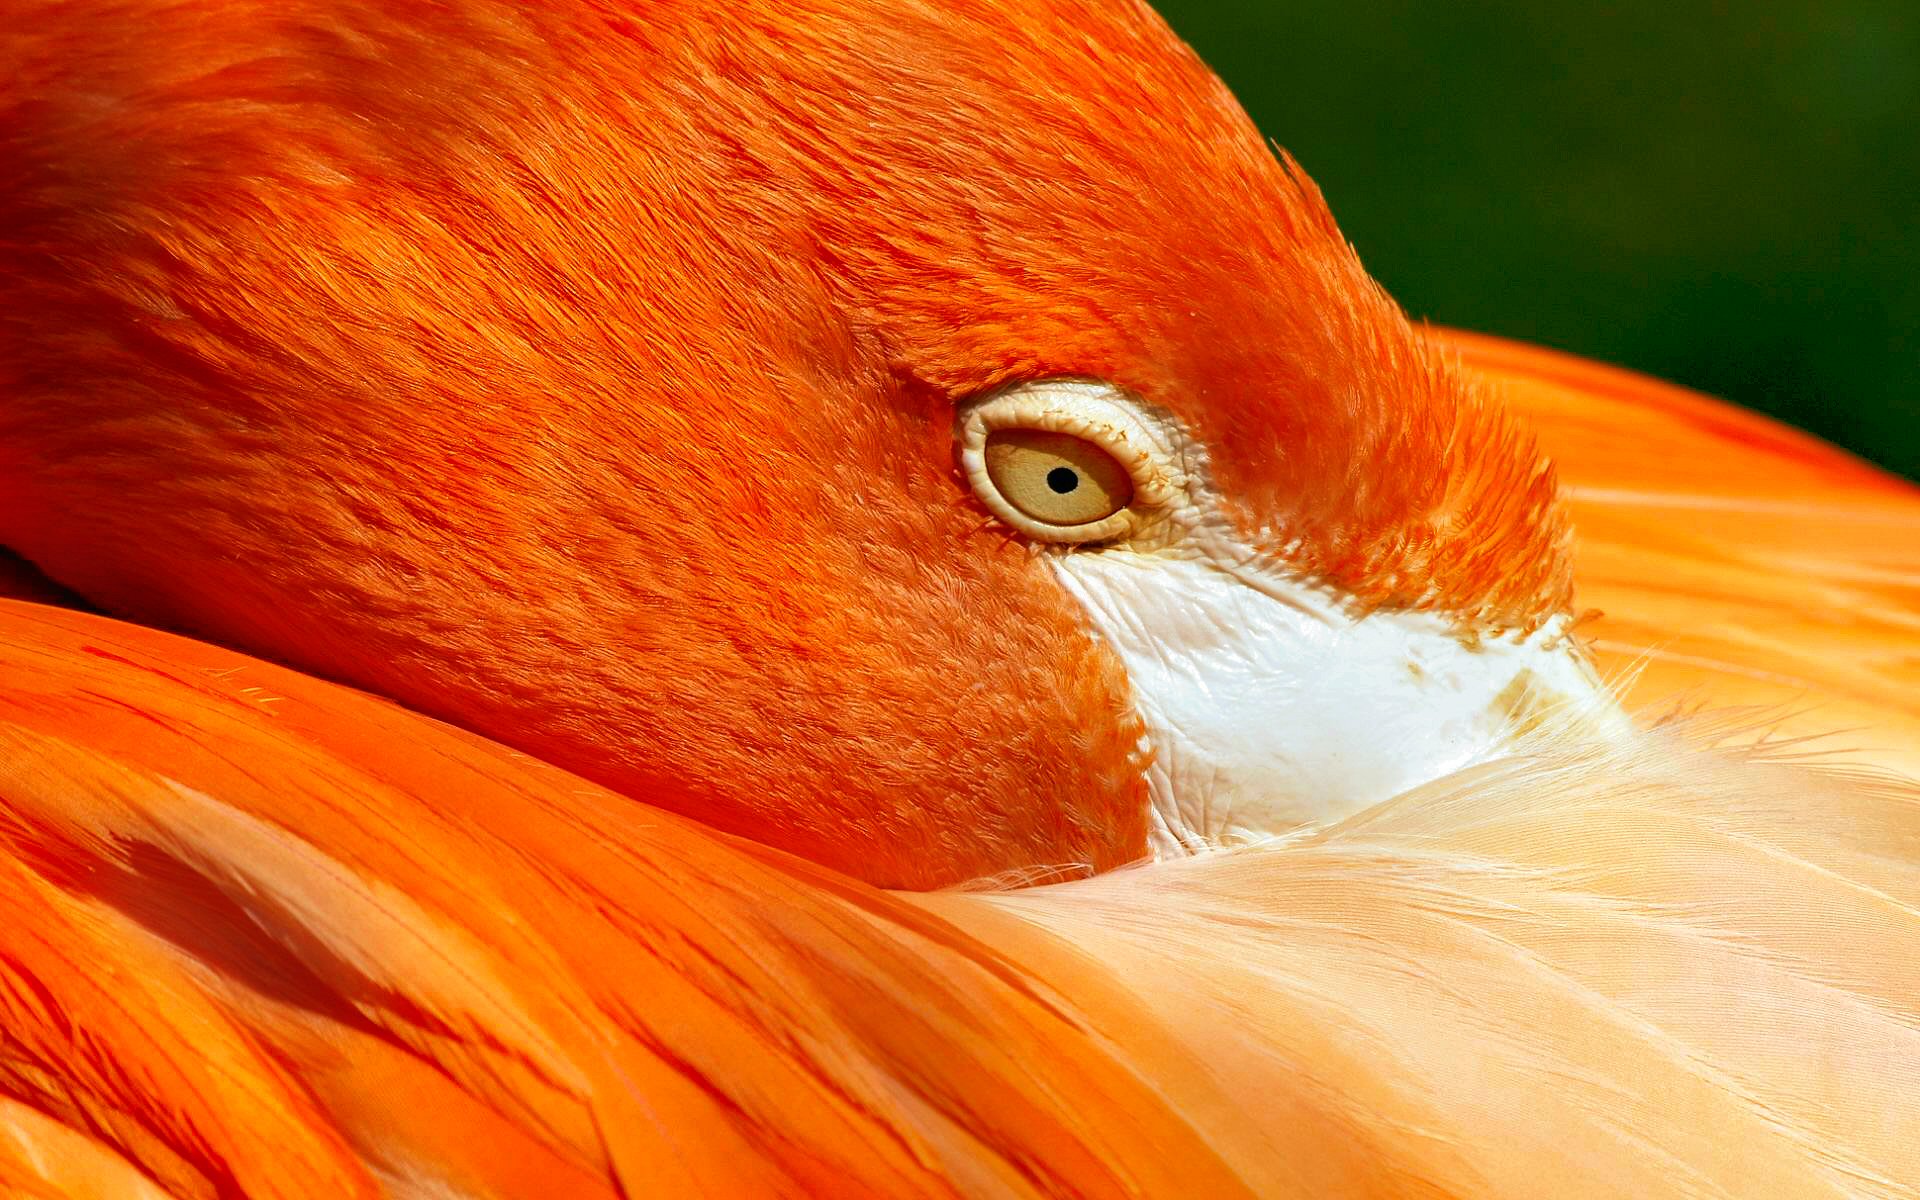 314167 descargar imagen animales, flamenco, ave, pluma, rojo, aves: fondos de pantalla y protectores de pantalla gratis